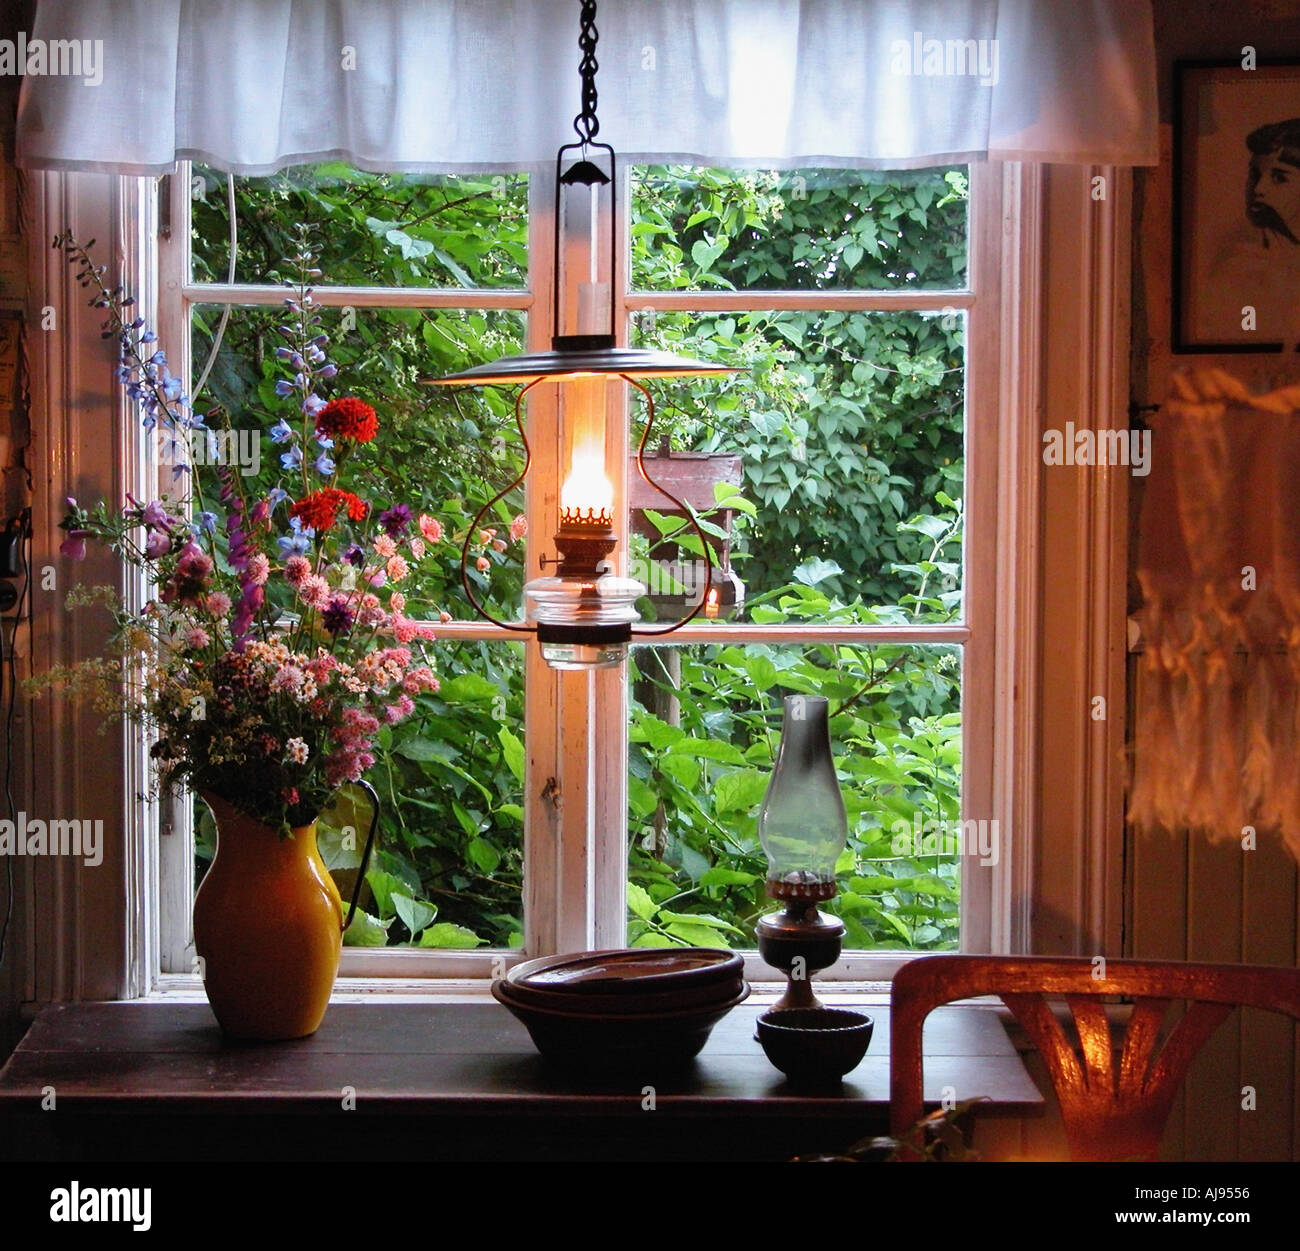 Cucina Oldfashioned kerosinlamp nella finestra Foto Stock